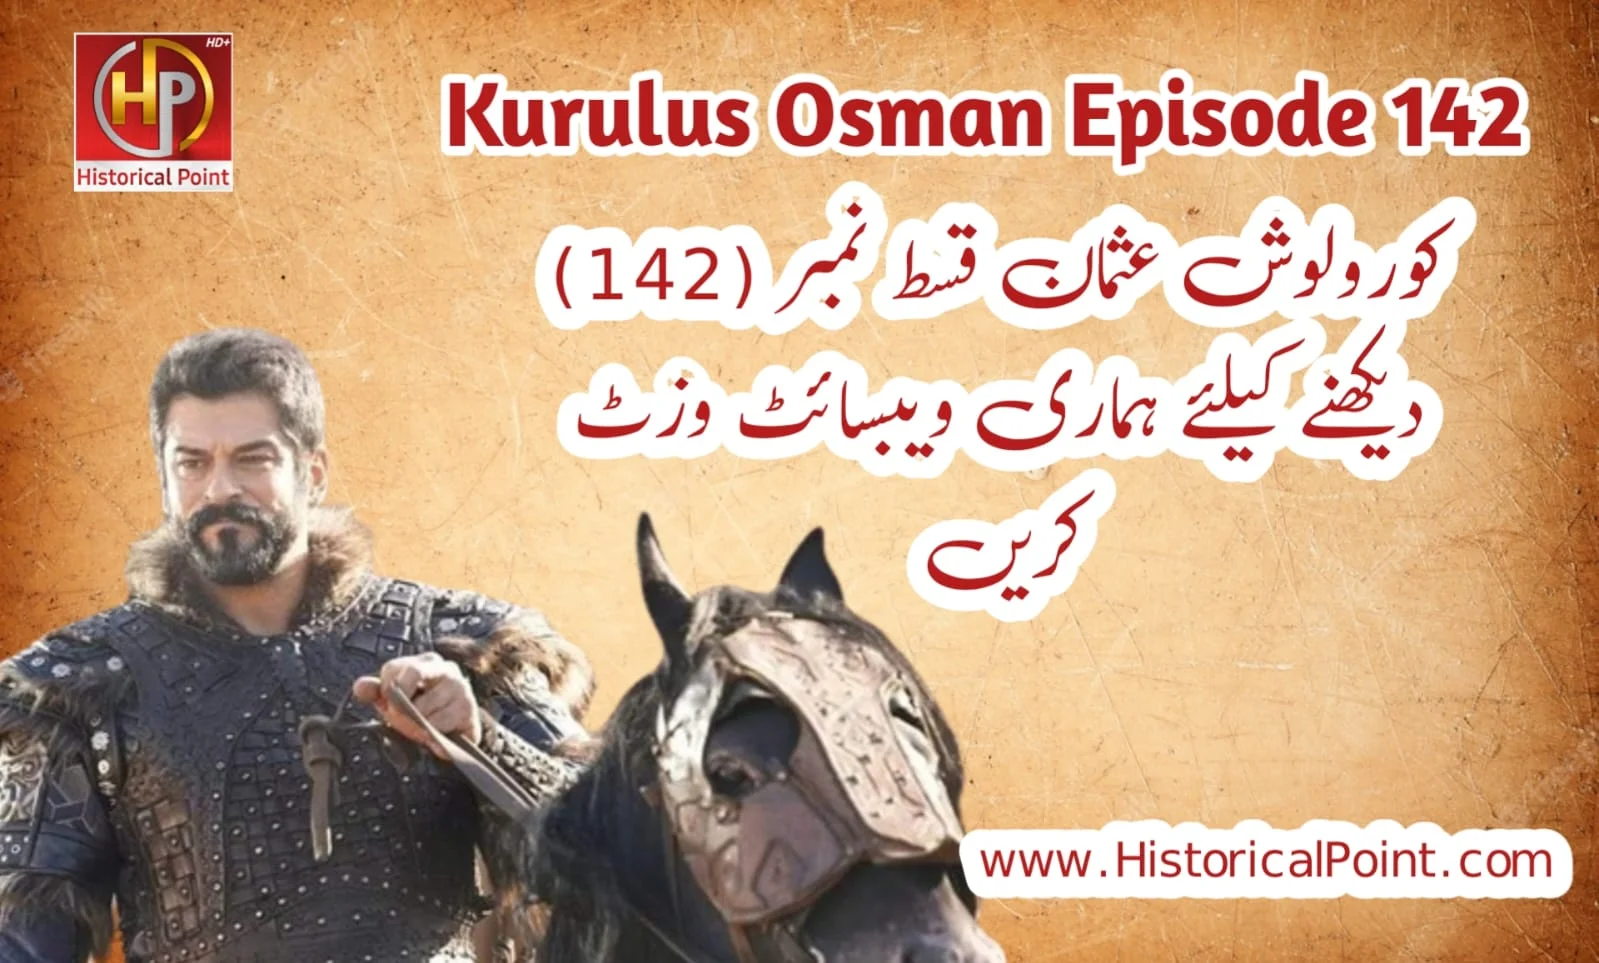 Kurulus Osman Episode 142 with urdu subtitles